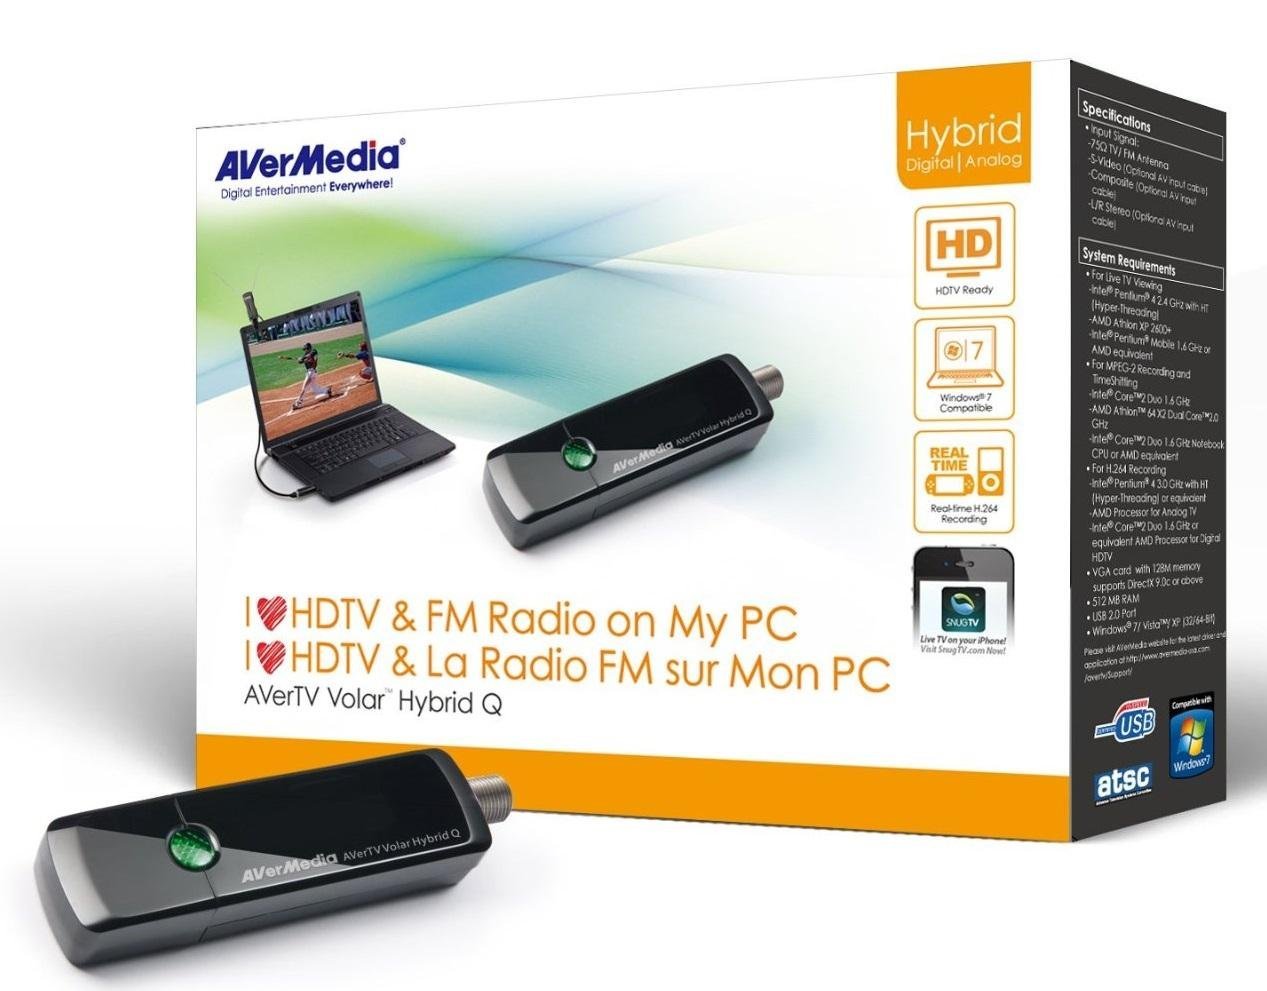 AVerMedia AVerTV Volar Hybrid Q, USB TV Tuner, ATSC, Clear QAM HDTV & FM Radio, Supports Windows & Android TV 6.0 Marshmallow or above (H837)